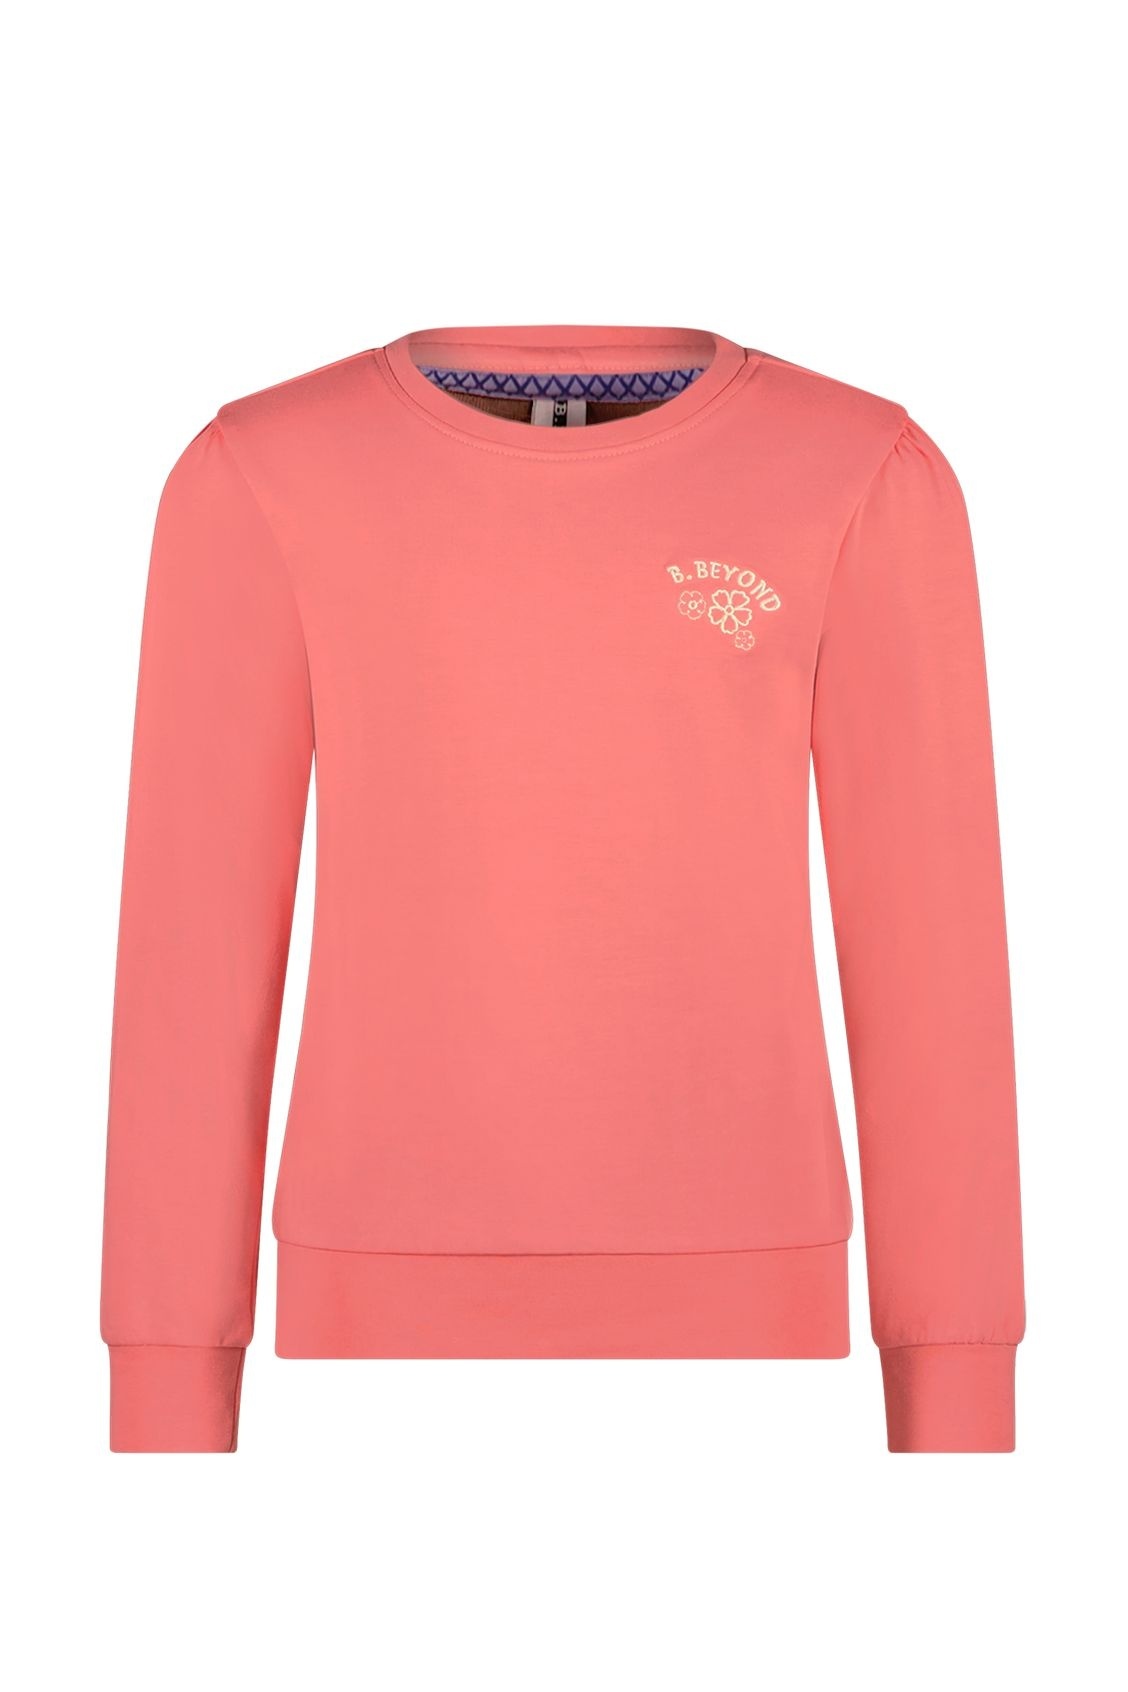 B.Nosy - Sweater Beau - Passion Pink - Maat 116